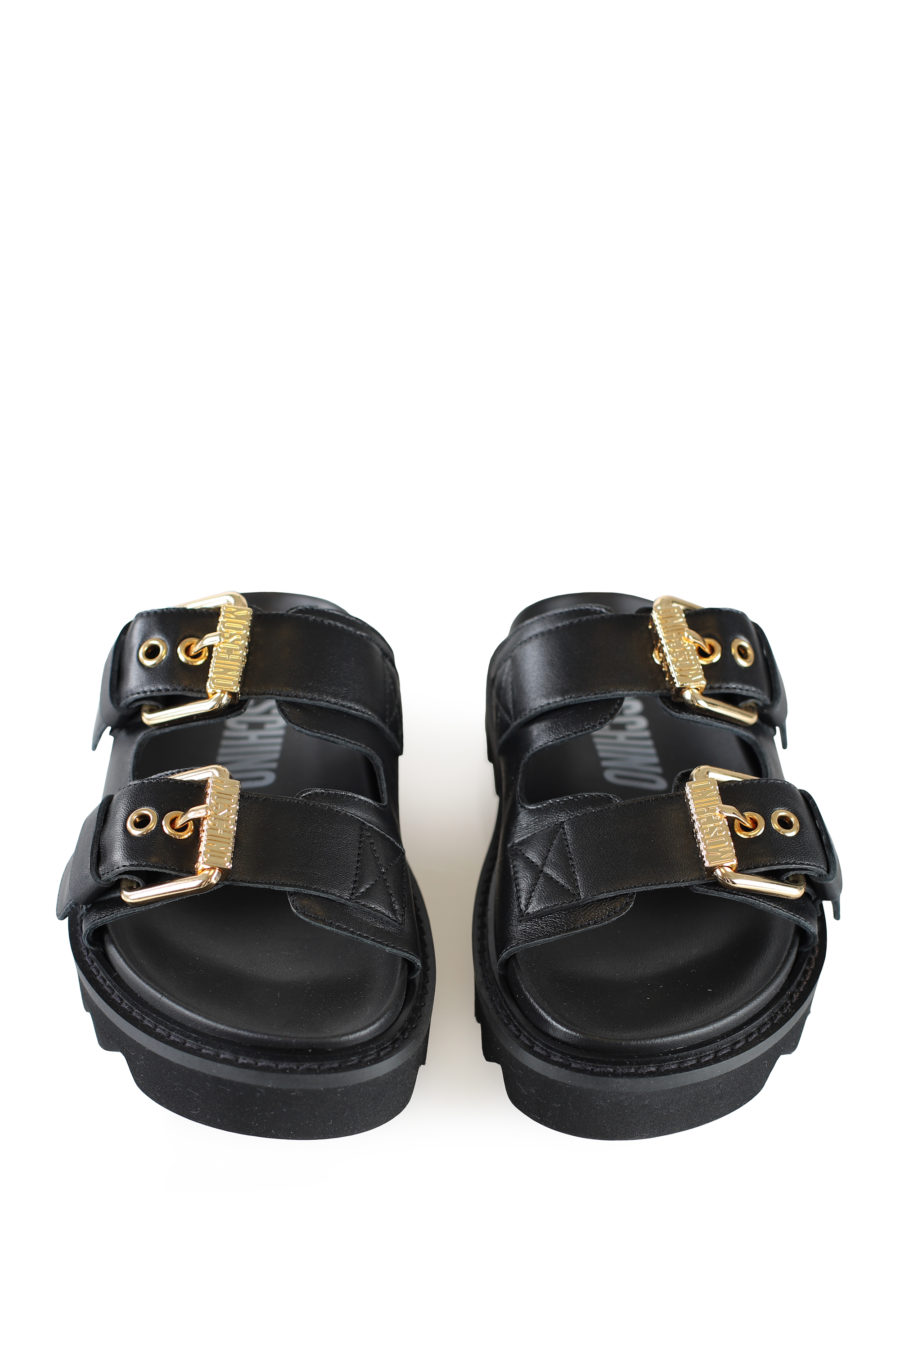 Sandalias negras con detalles dorados - IMG 1942